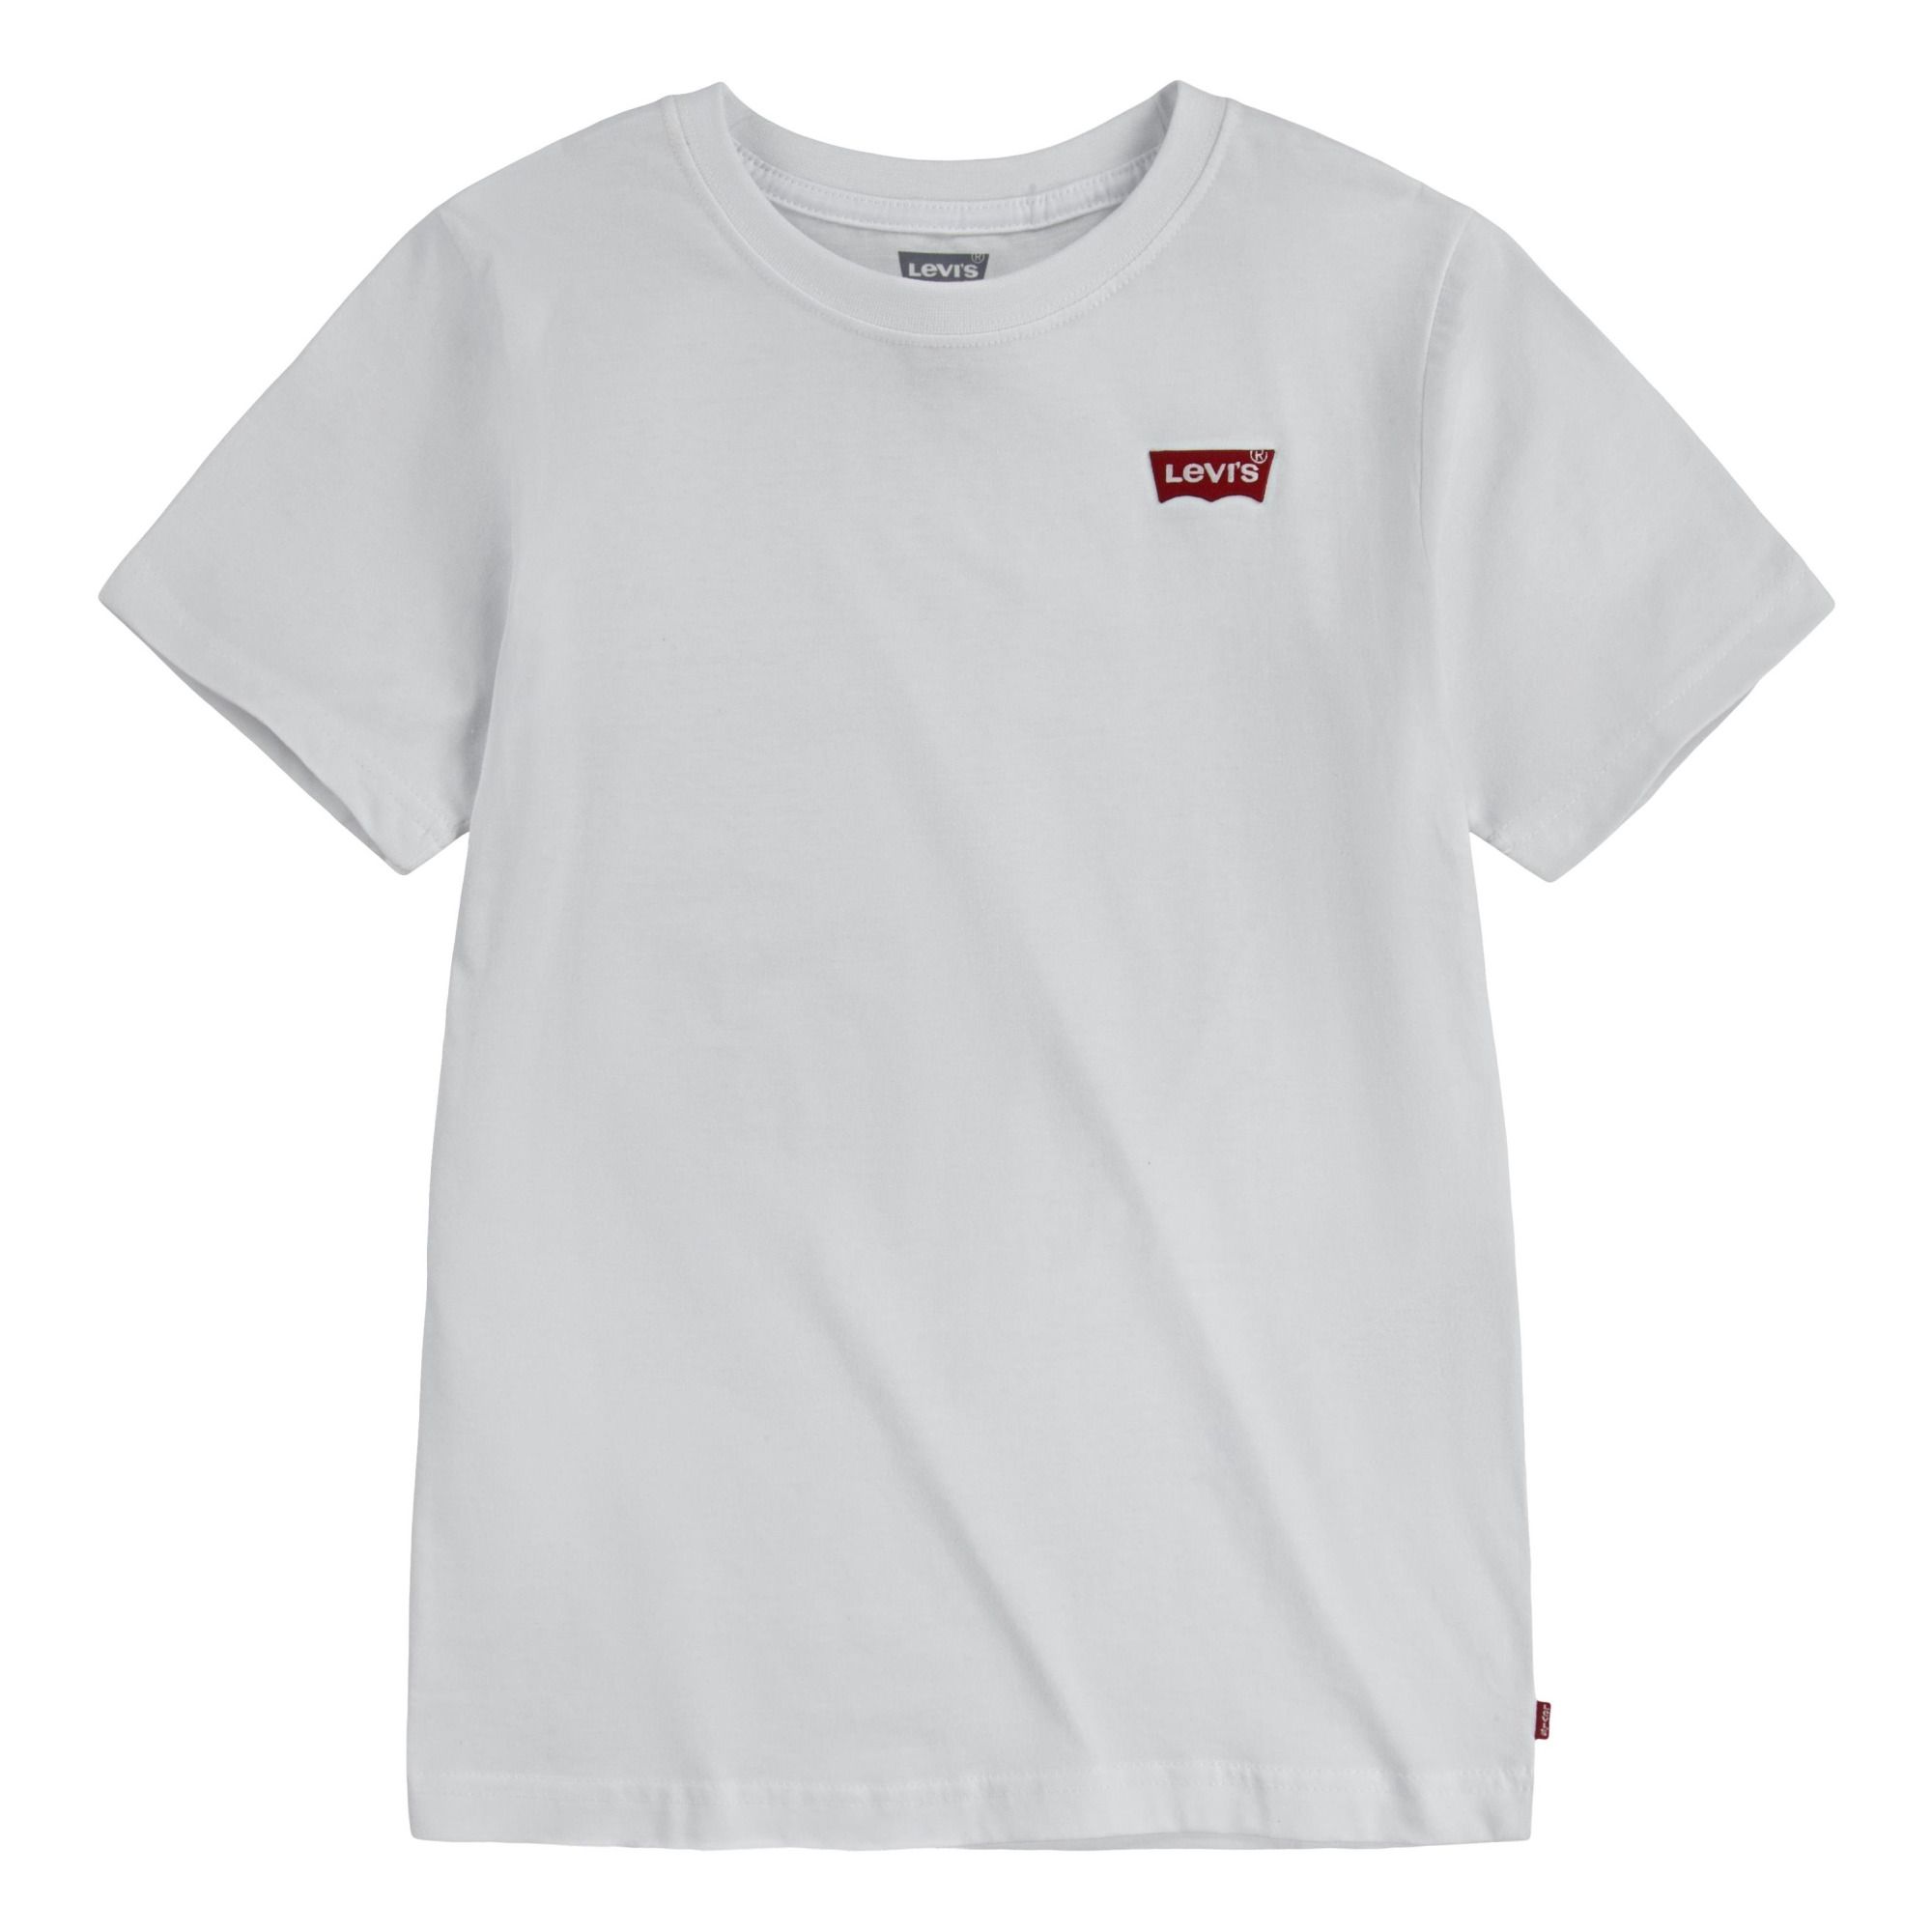 Levi's - Plain T-shirt - White |